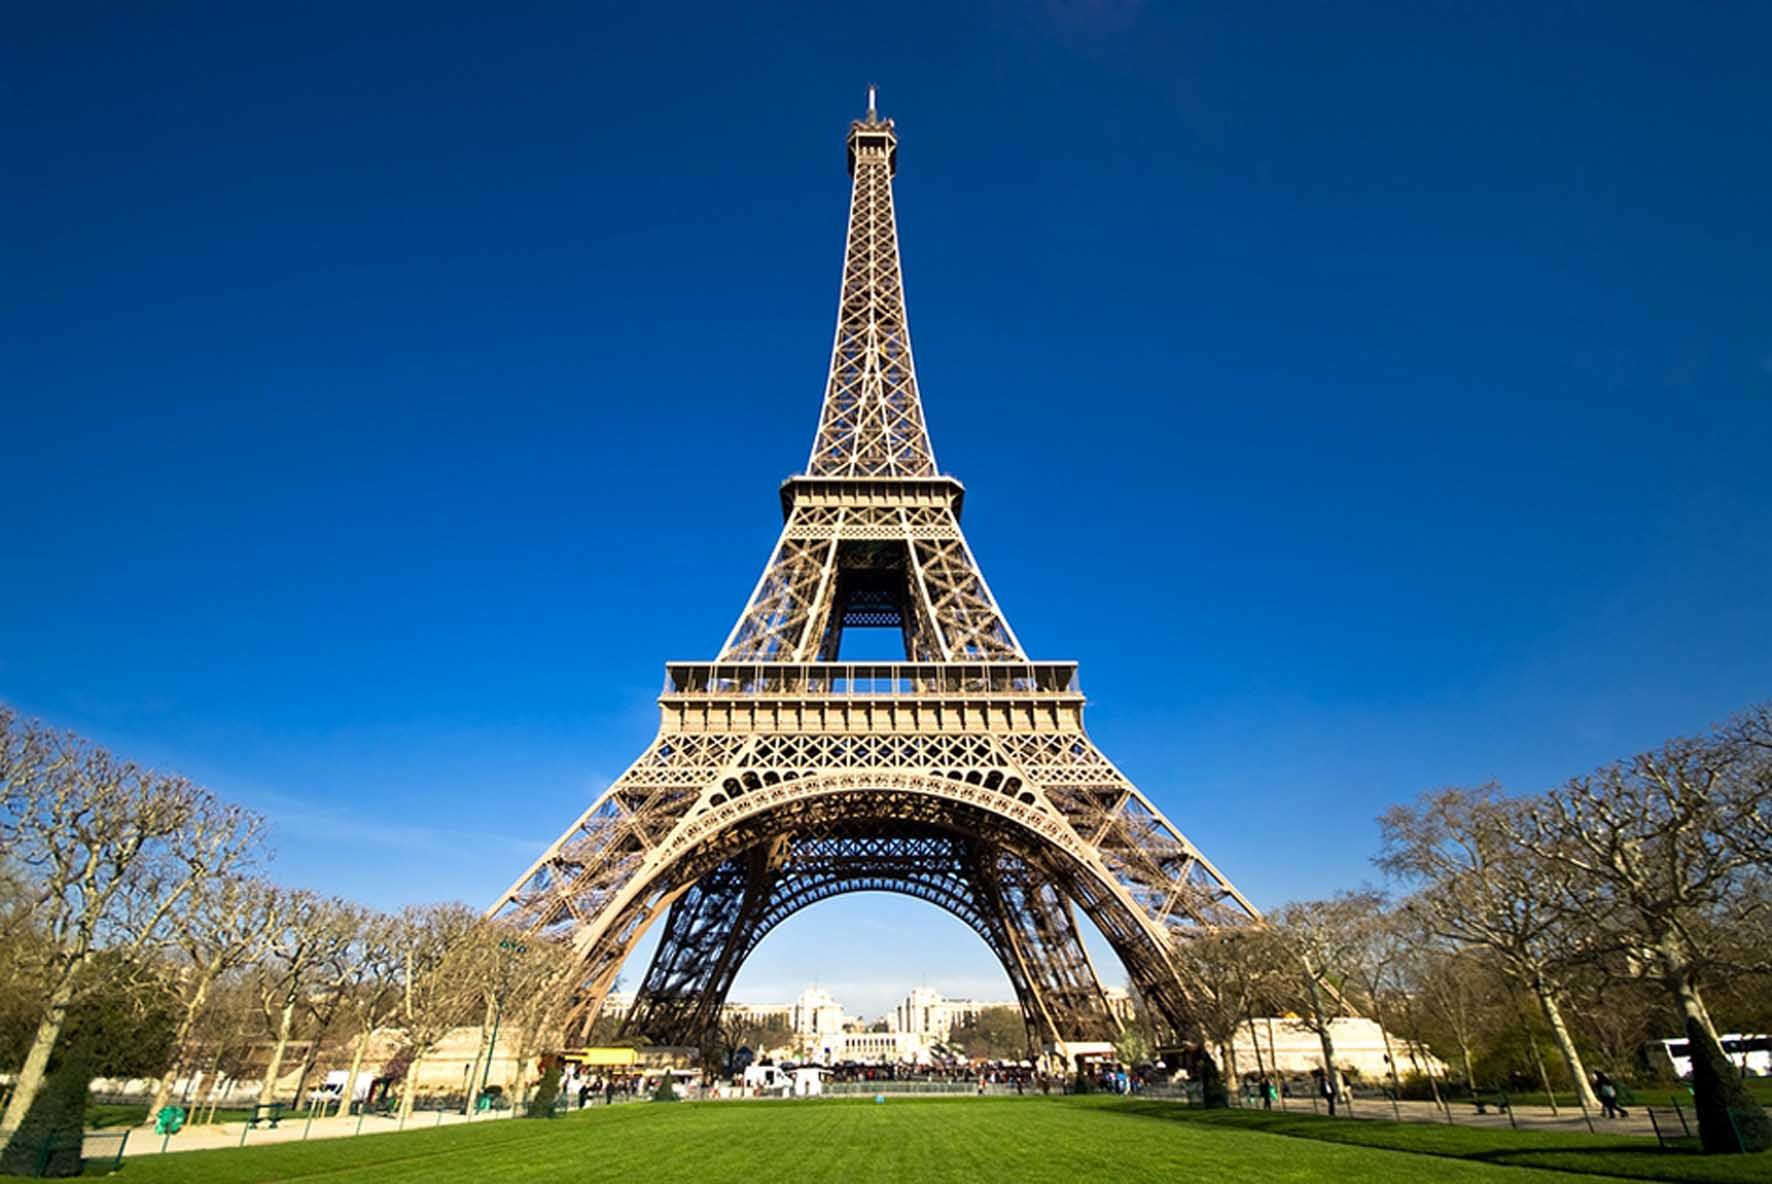 Eiffel Tower blue skies